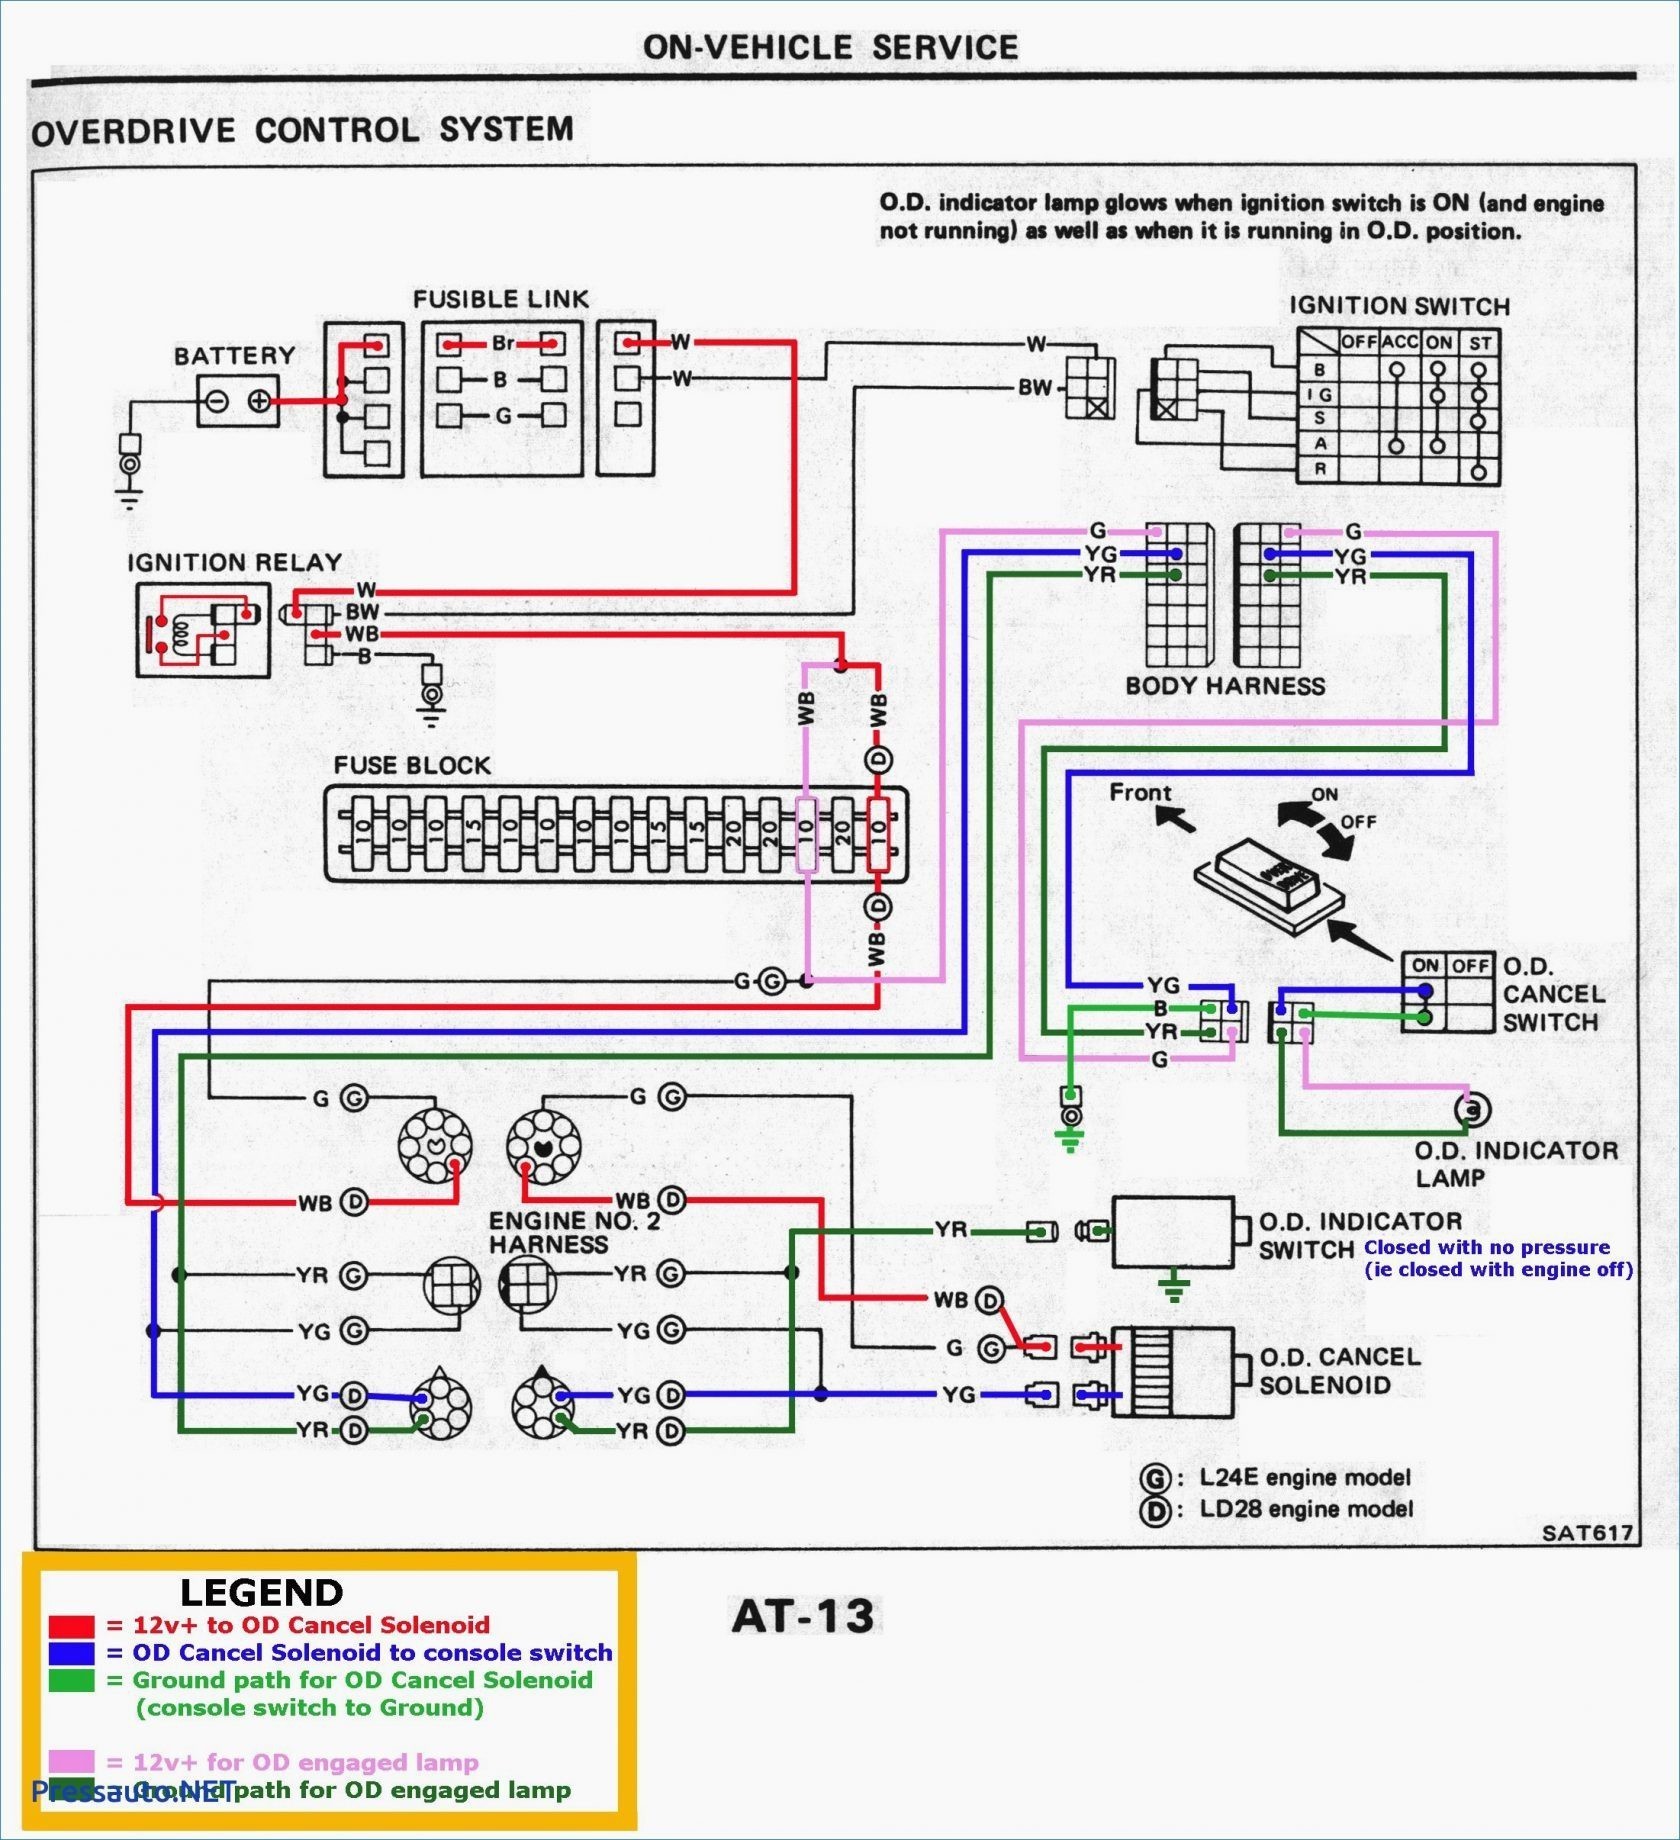 2001 Dodge Ram Engine Diagram 2001 Dodge Ram Wiring Harness Wiring Diagram toolbox Of 2001 Dodge Ram Engine Diagram